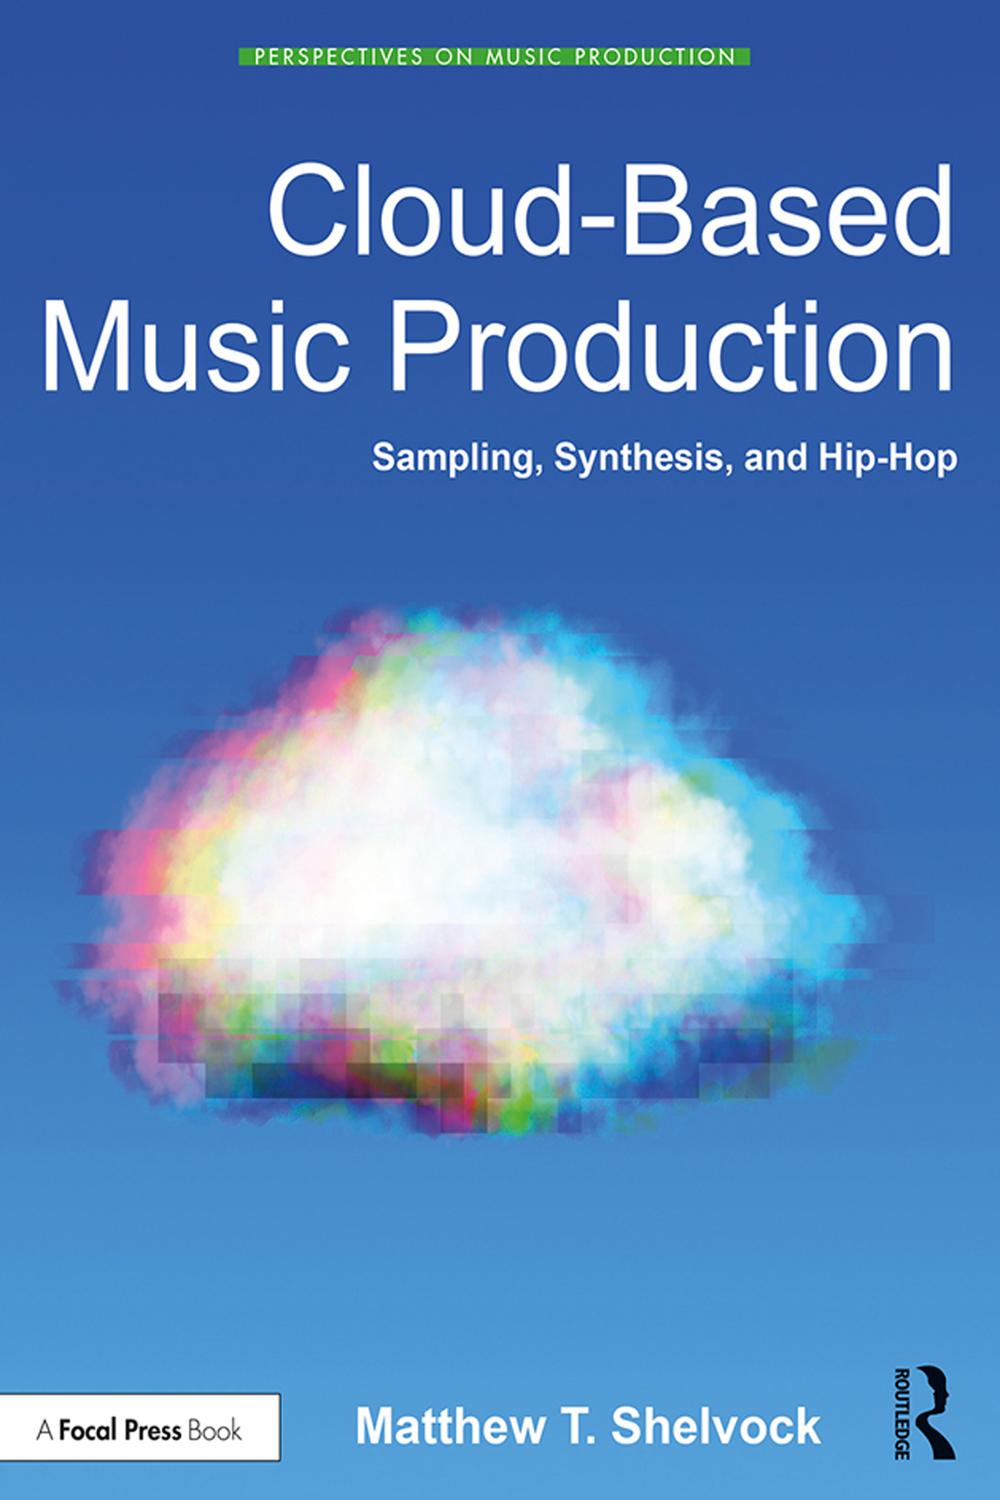 PDF] Cloud-Based Music Production by Matthew T. Shelvock eBook ...